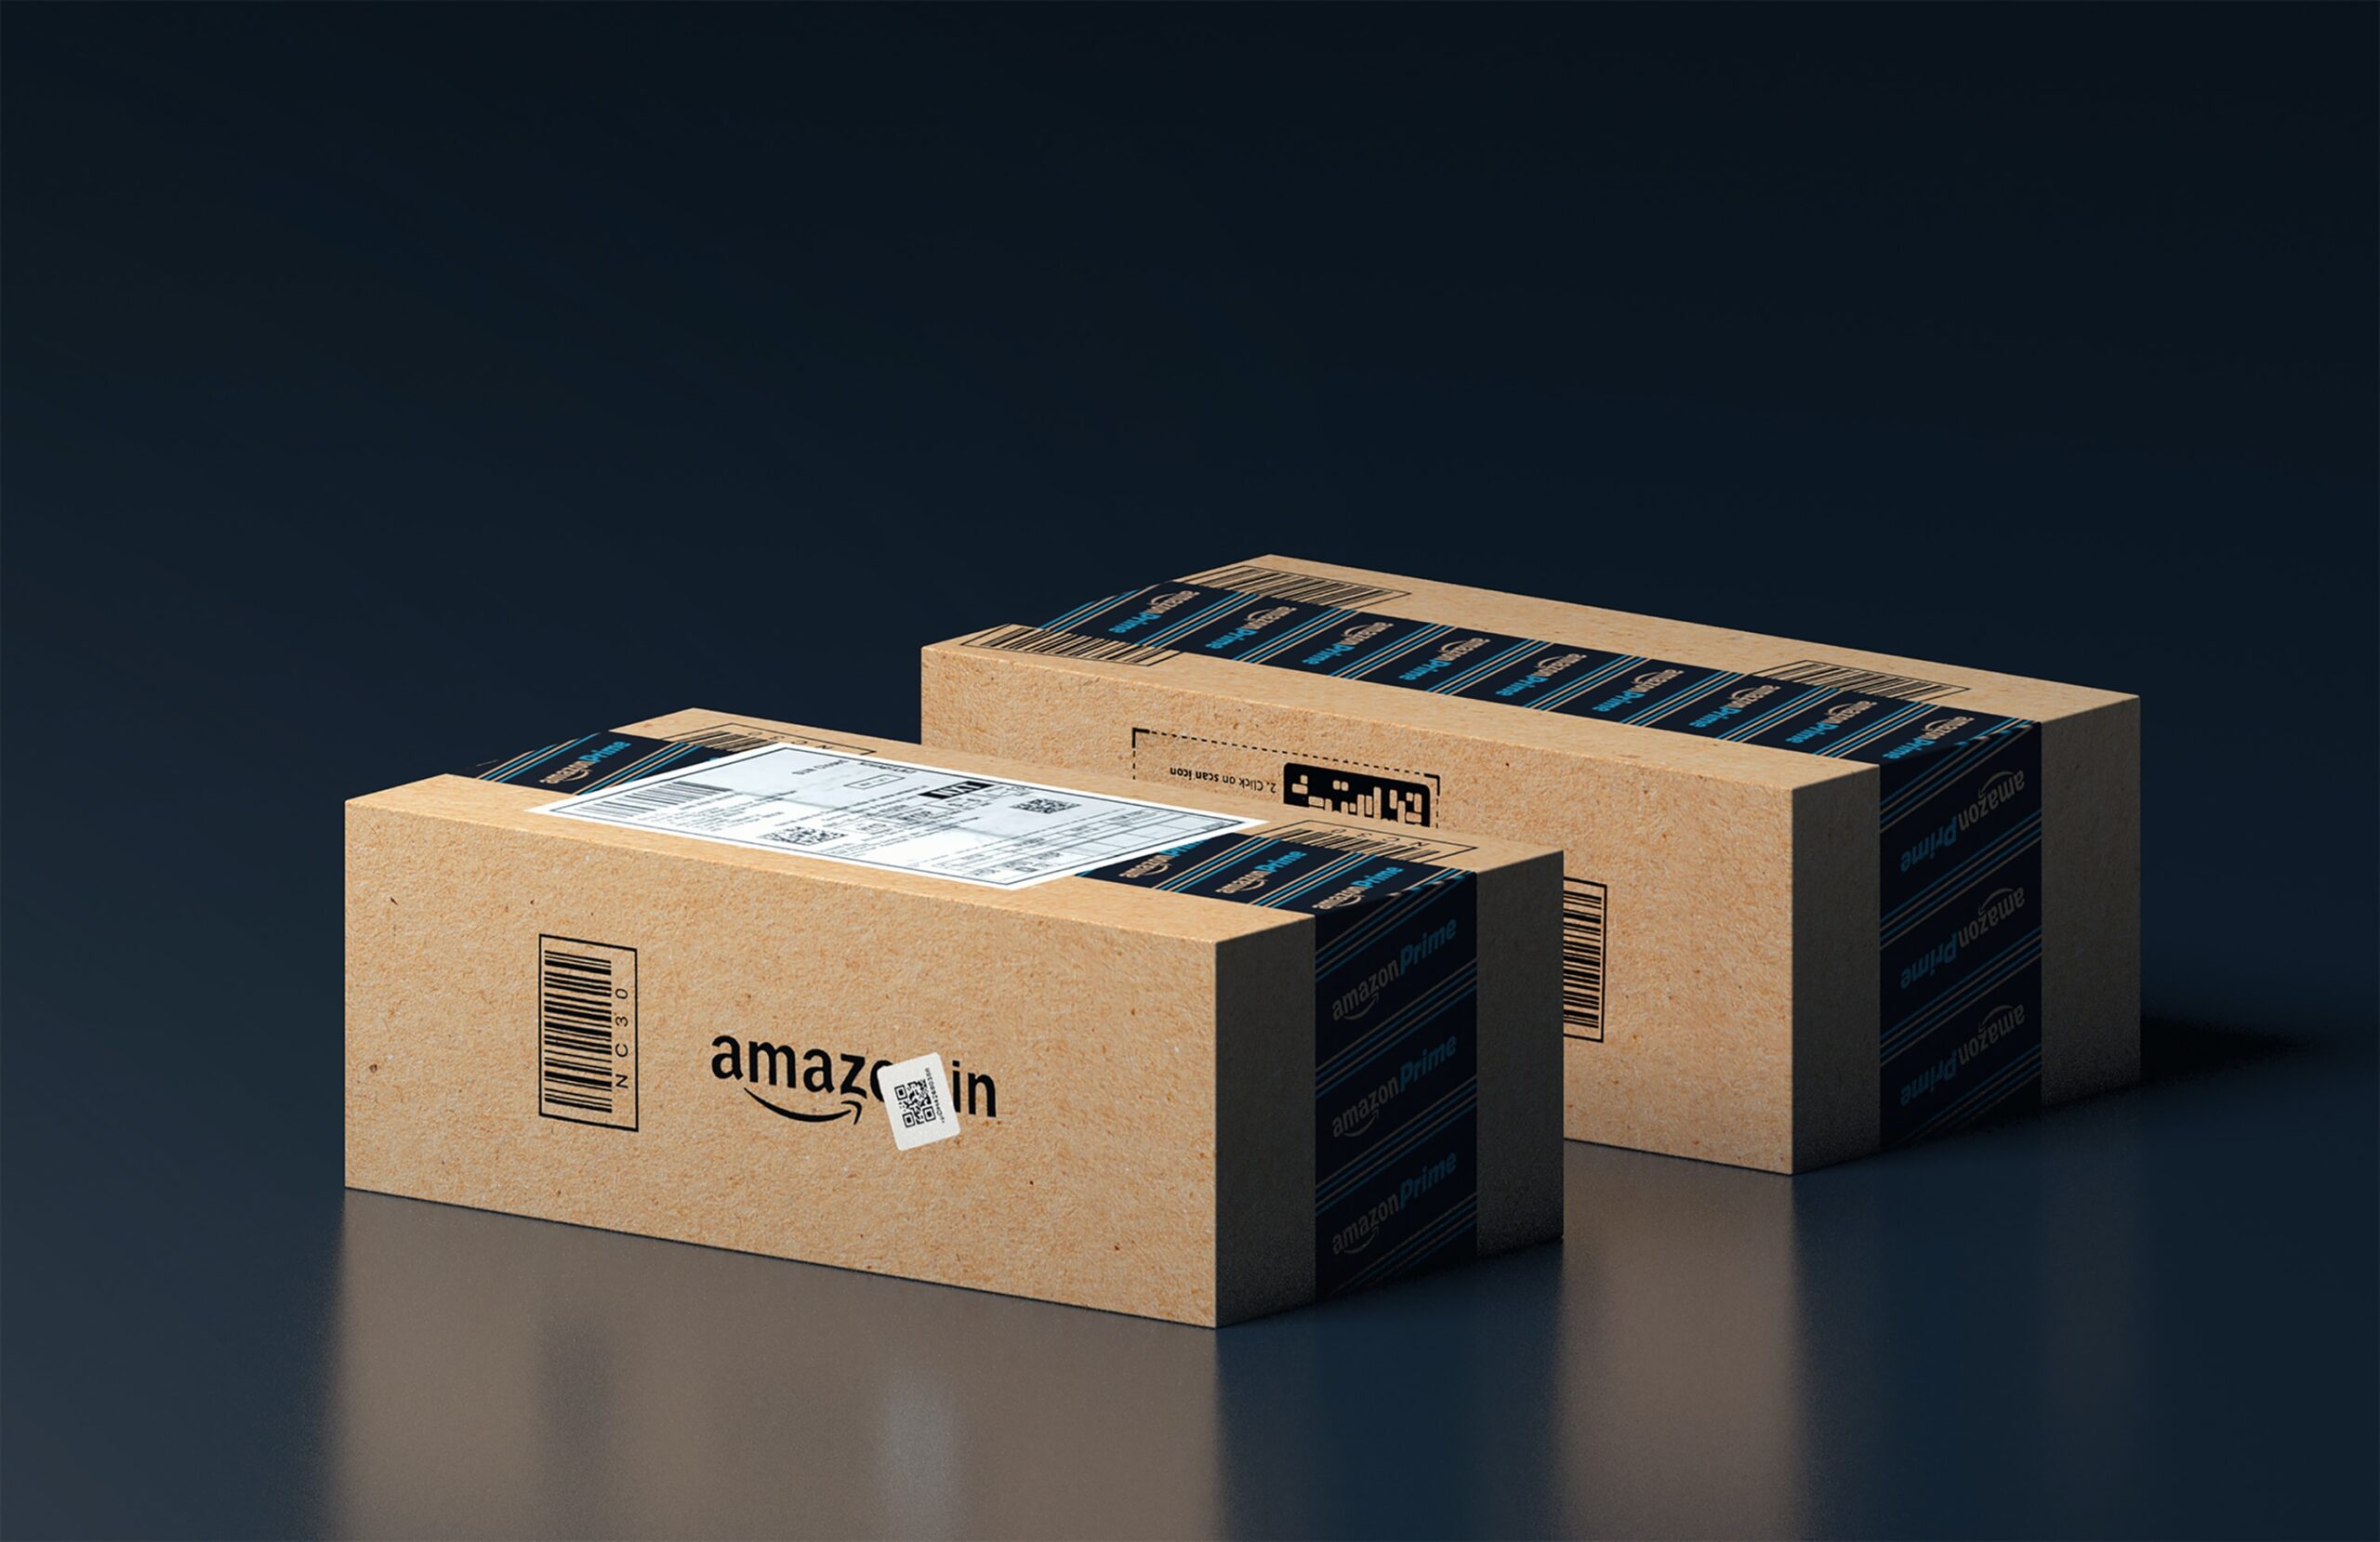 Trademark infringement – the case of Amazon